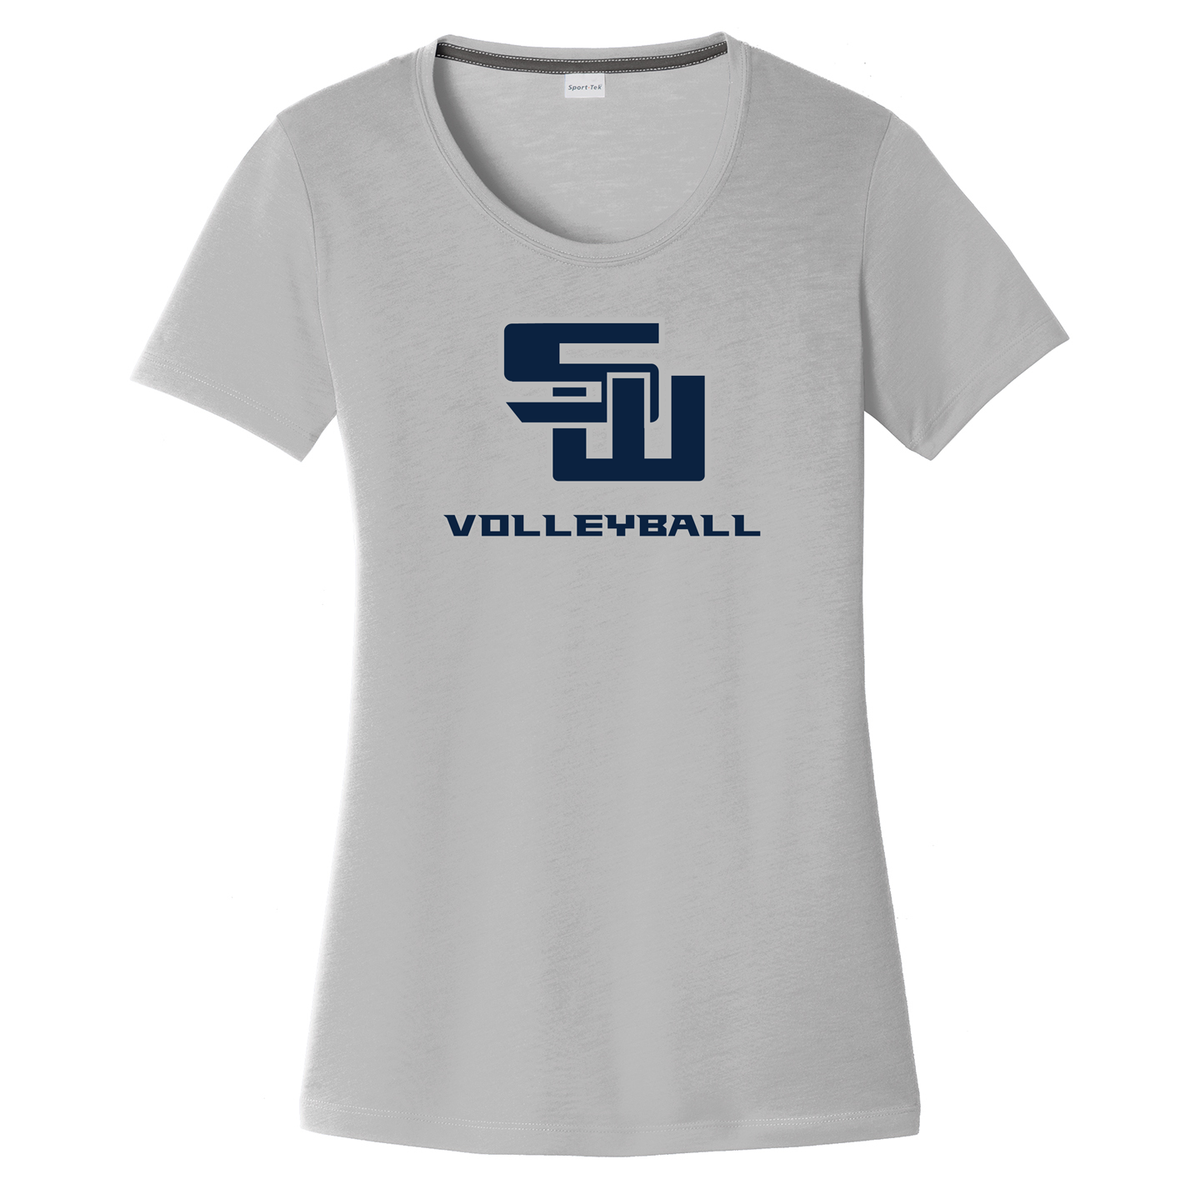 Smithtown West Volleyball  Women's CottonTouch Performance T-Shirt